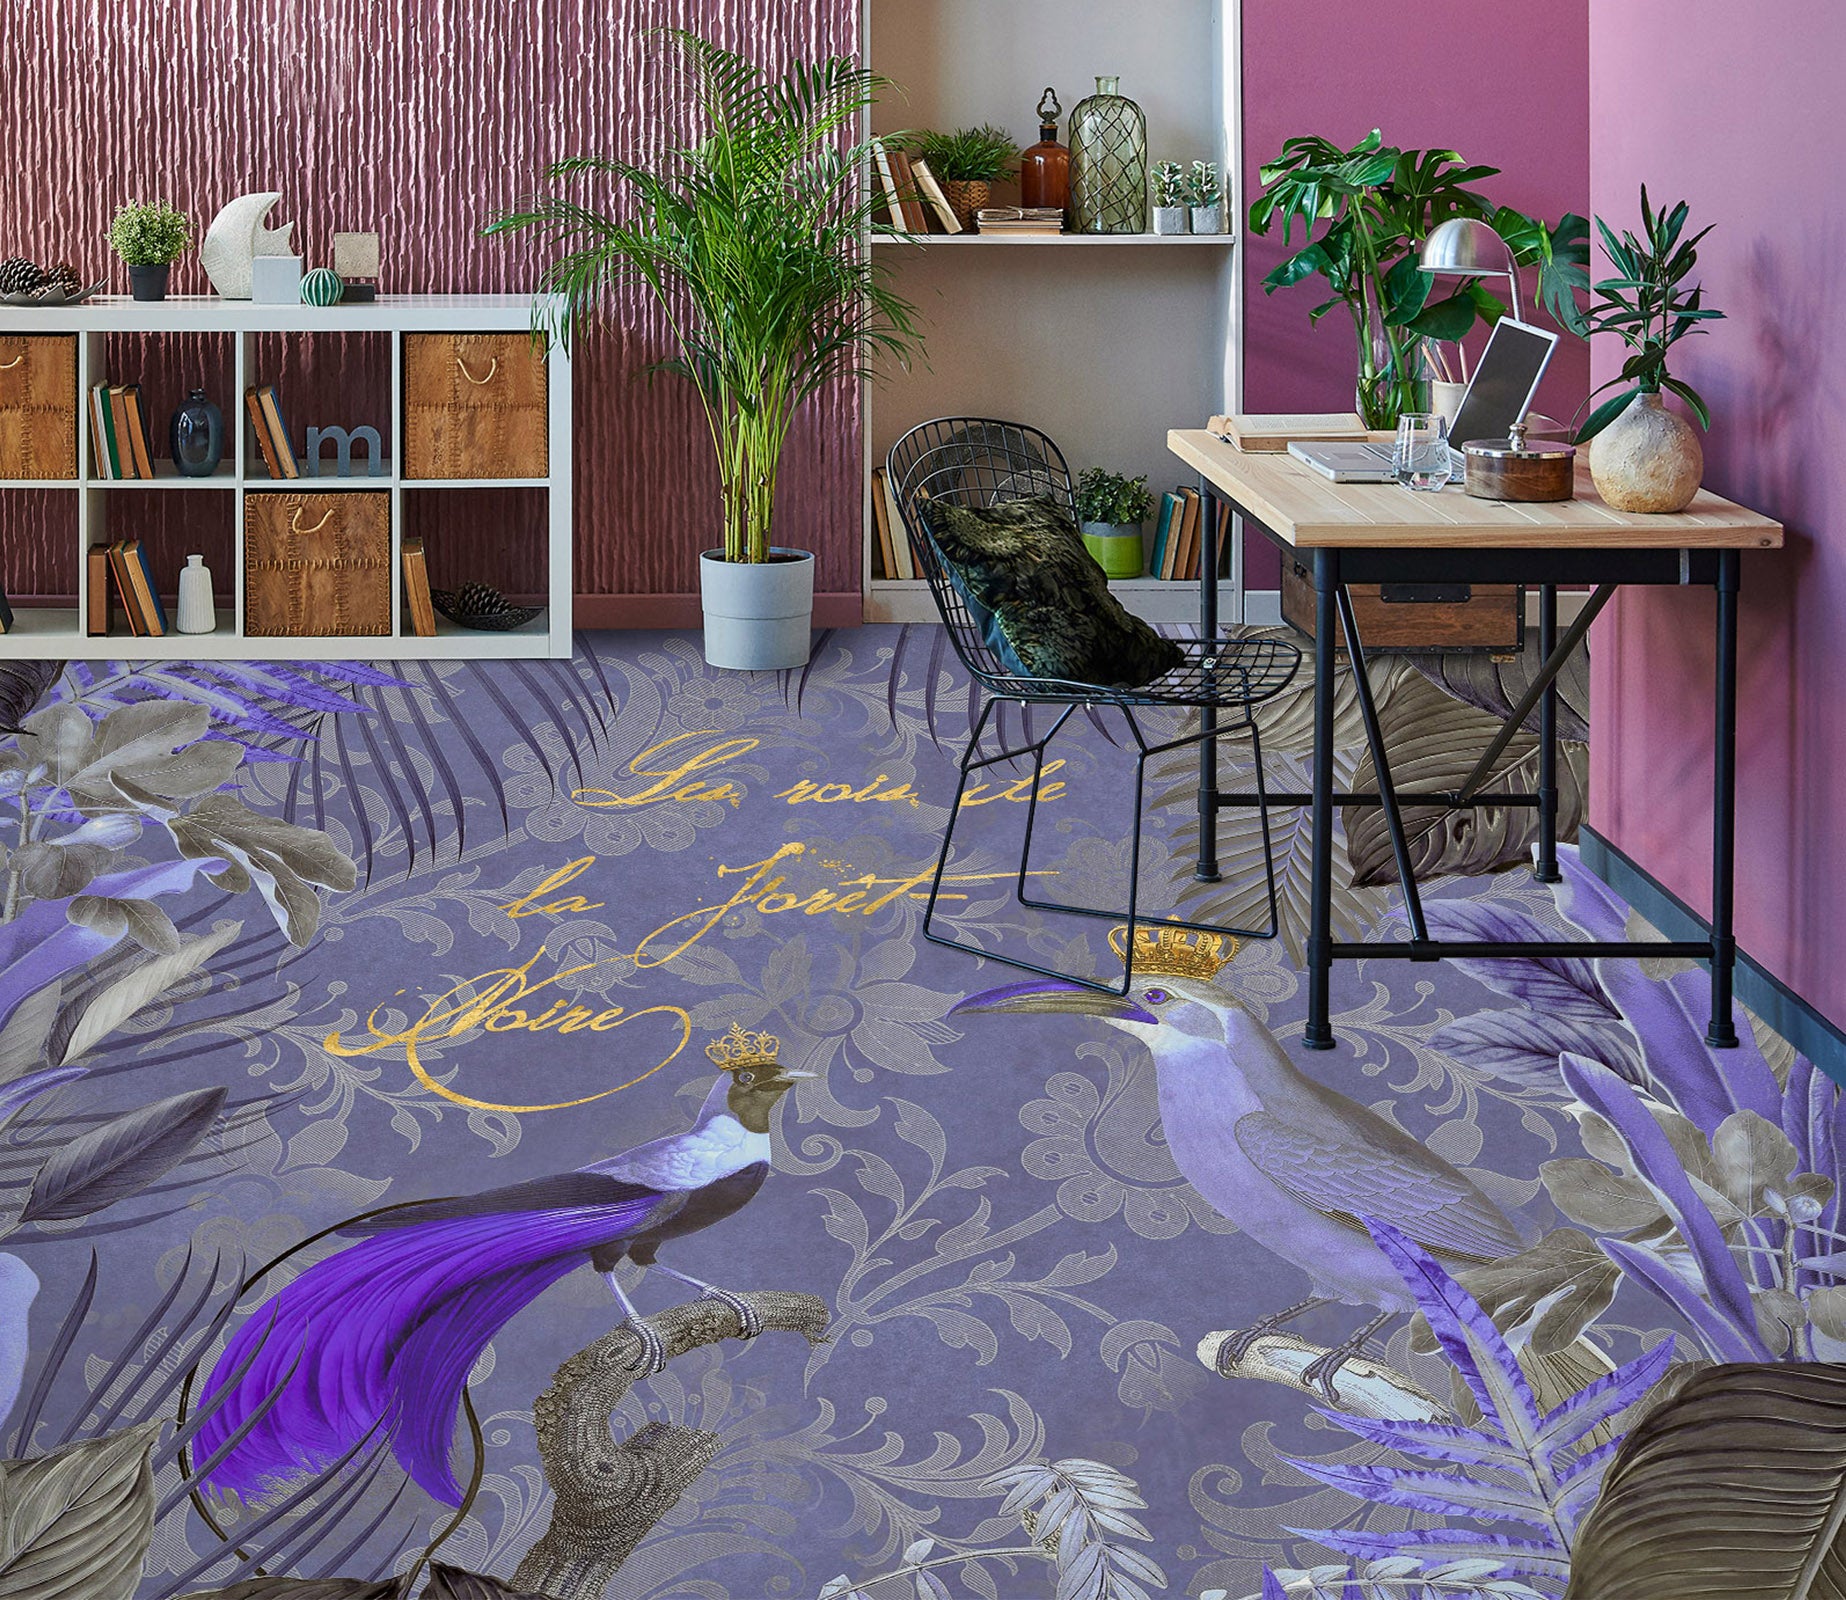 3D Purple Bird 104165 Andrea Haase Floor Mural  Wallpaper Murals Self-Adhesive Removable Print Epoxy